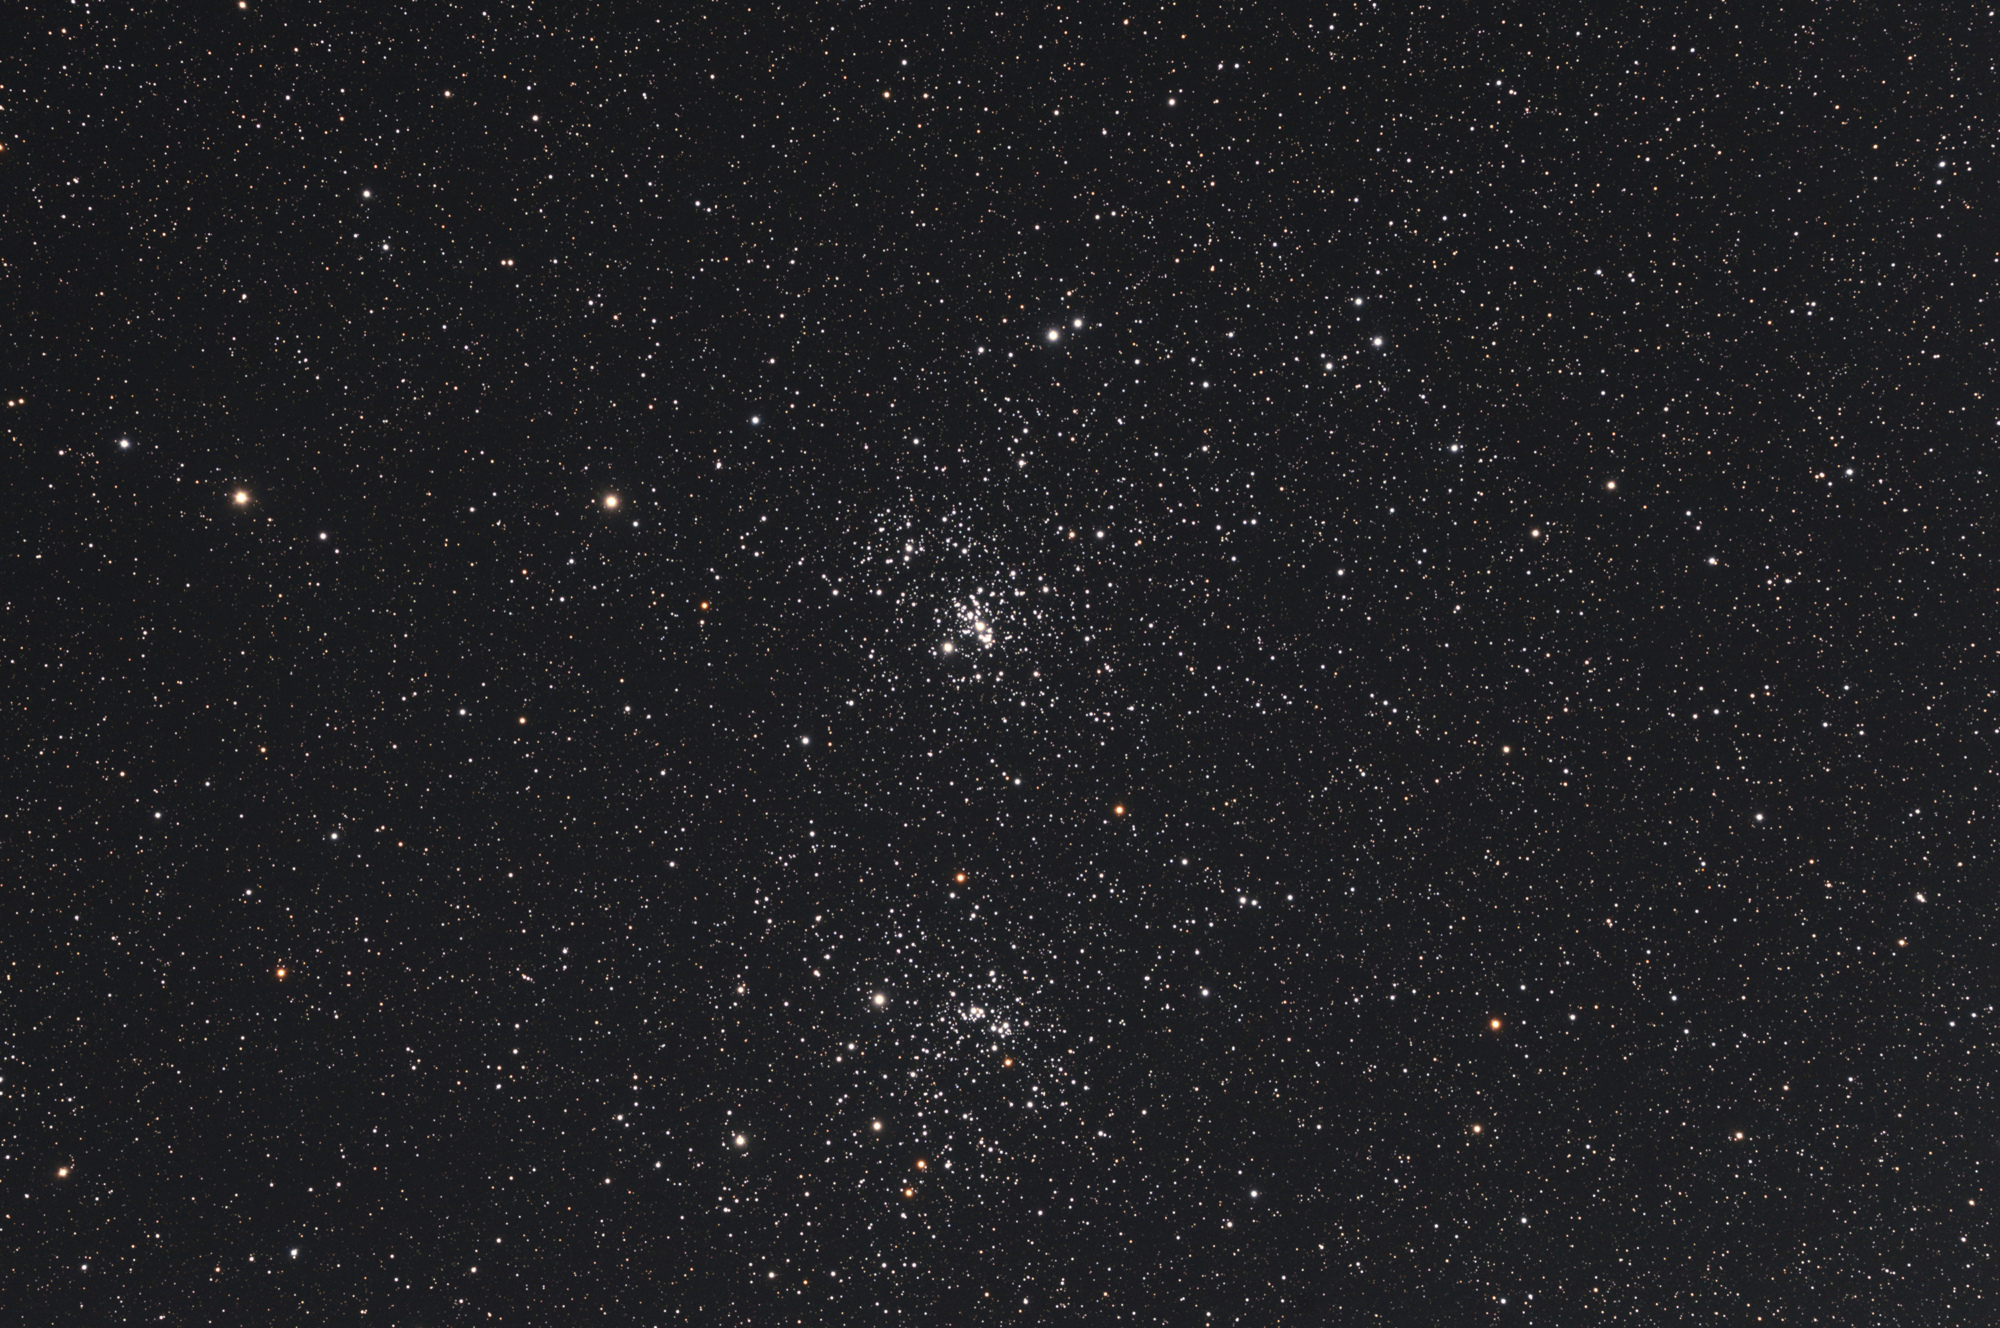 NGC_869_&_884-dss1-iris-1-cs5-2-FINAL-4c.jpg